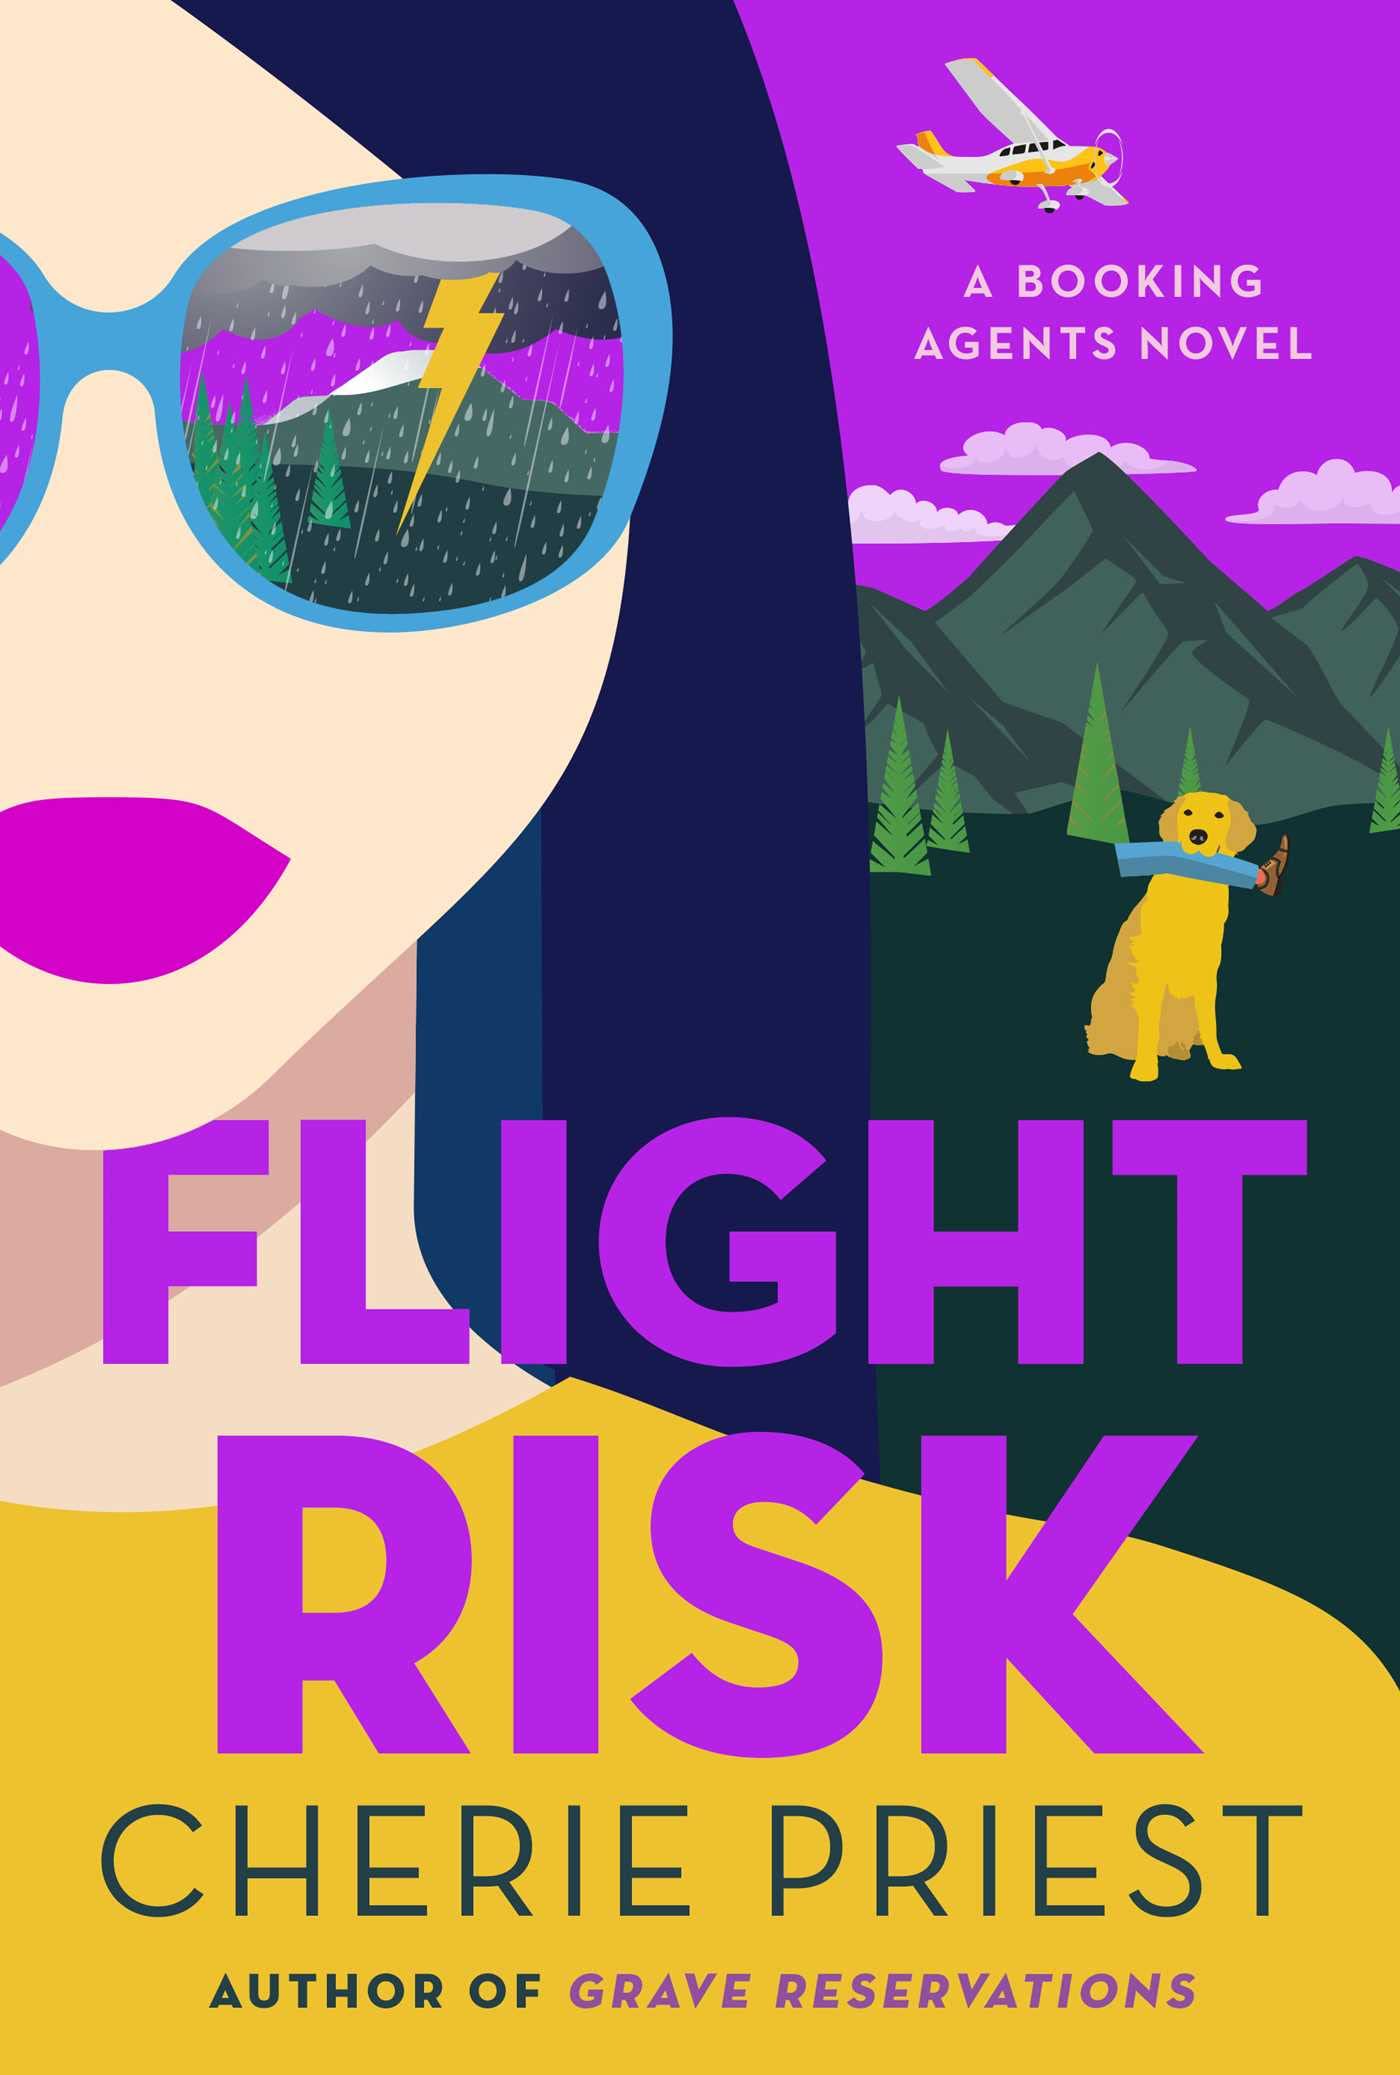 Image for "Flight Risk"